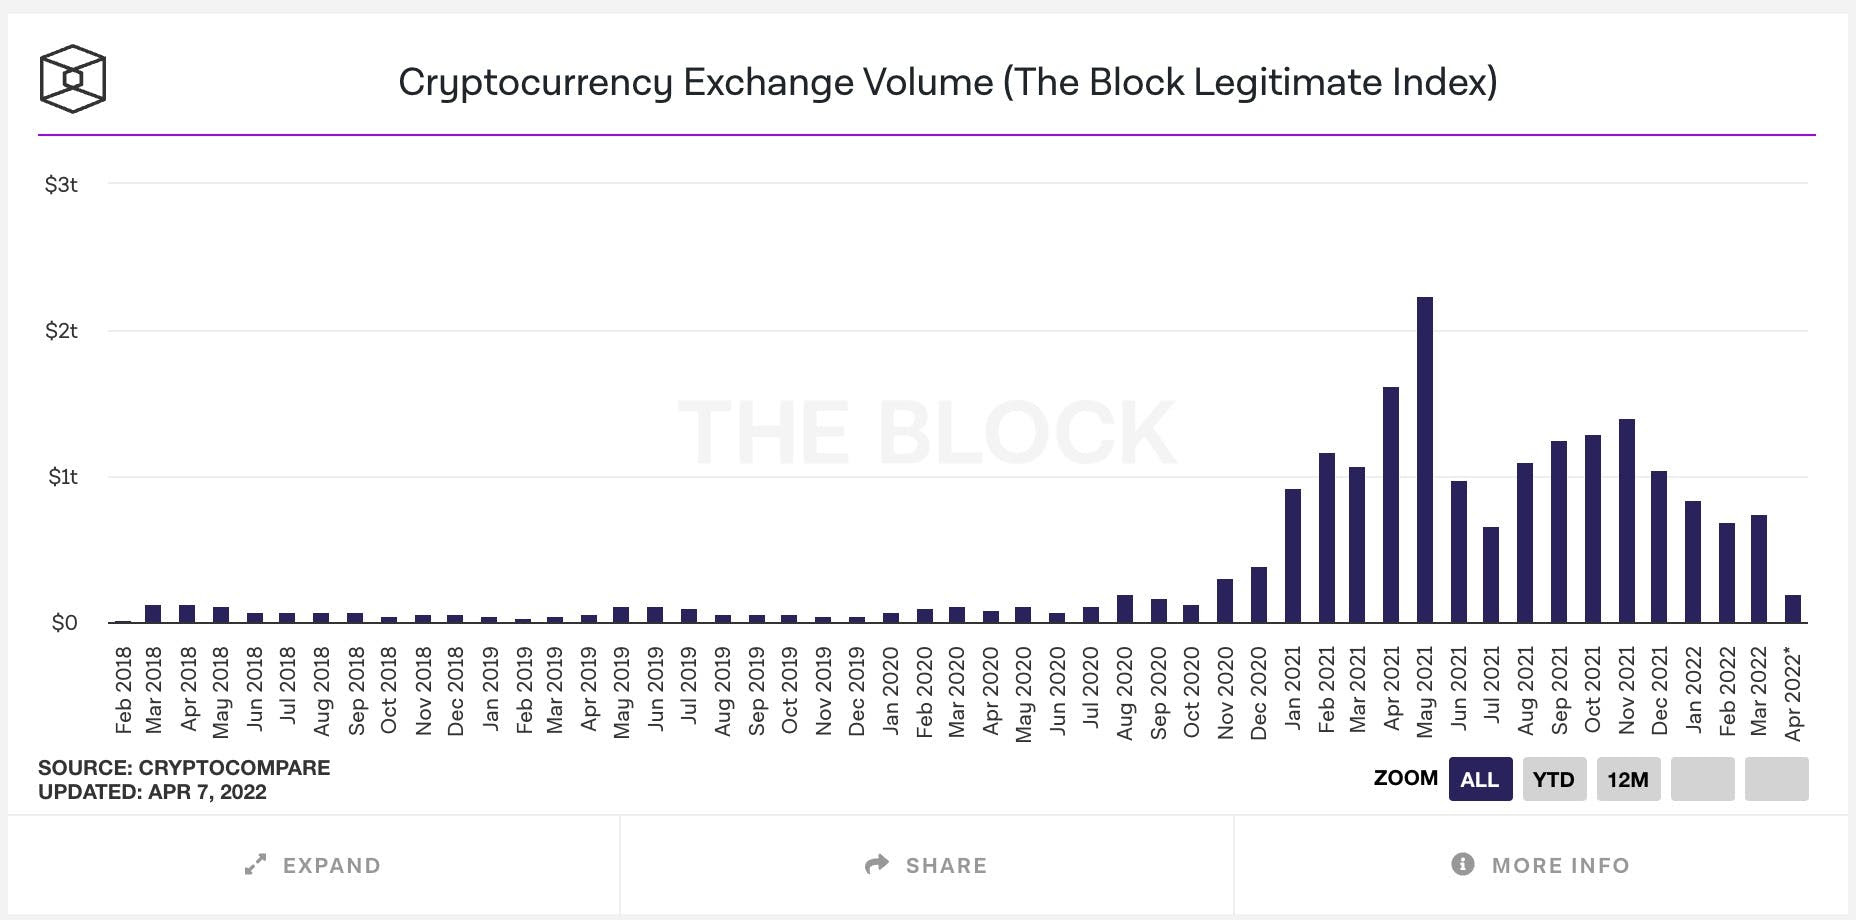 Cryptocurrency exchange volume